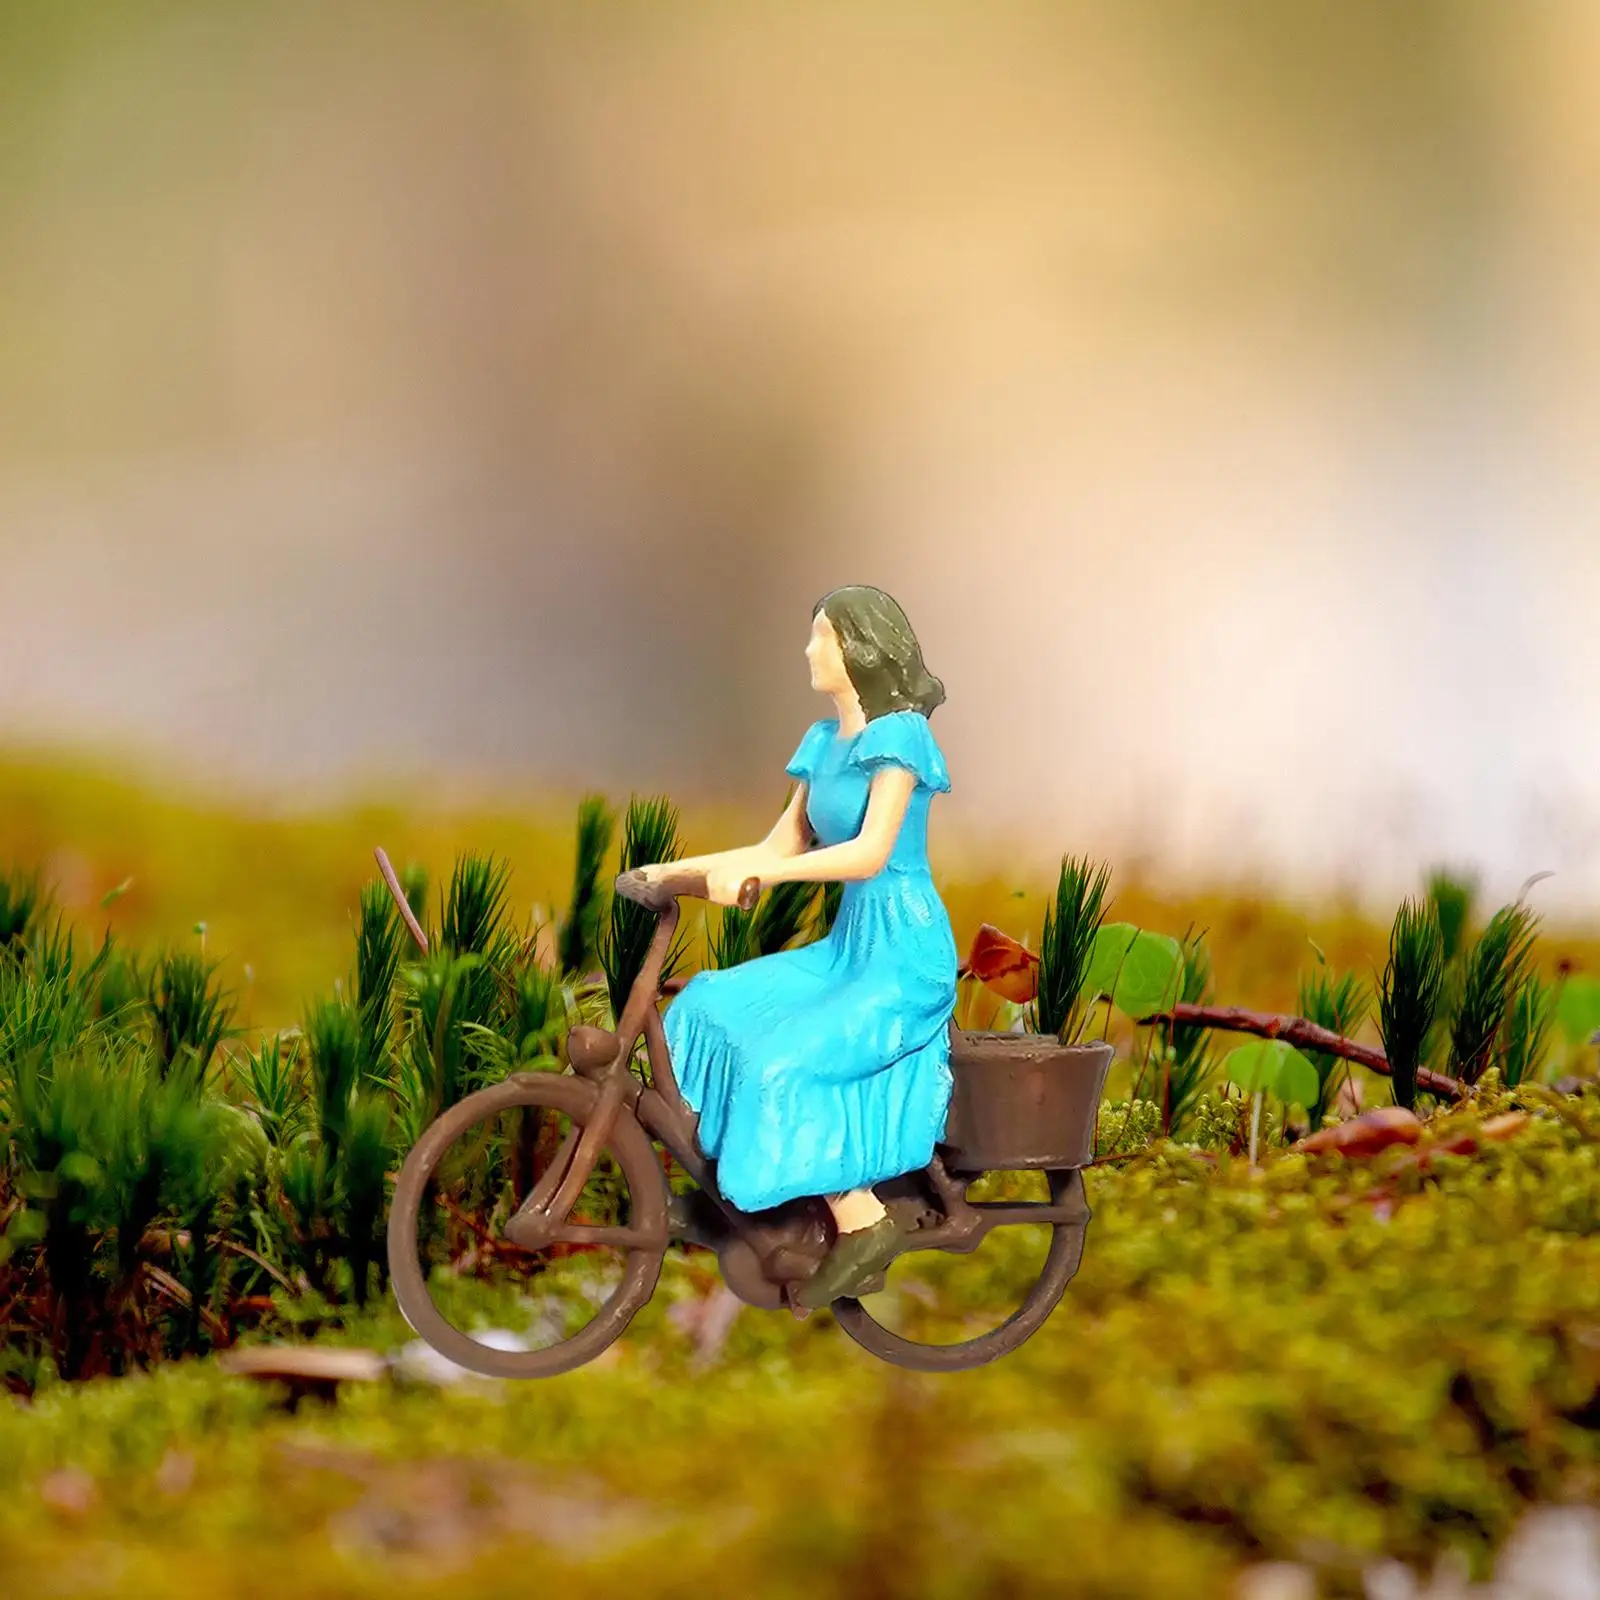 Realistic 1/87 Scale Cyclist Figures Mini People Model Ornament for Miniature Scene Diorama Dollhouse Sand Table Layout